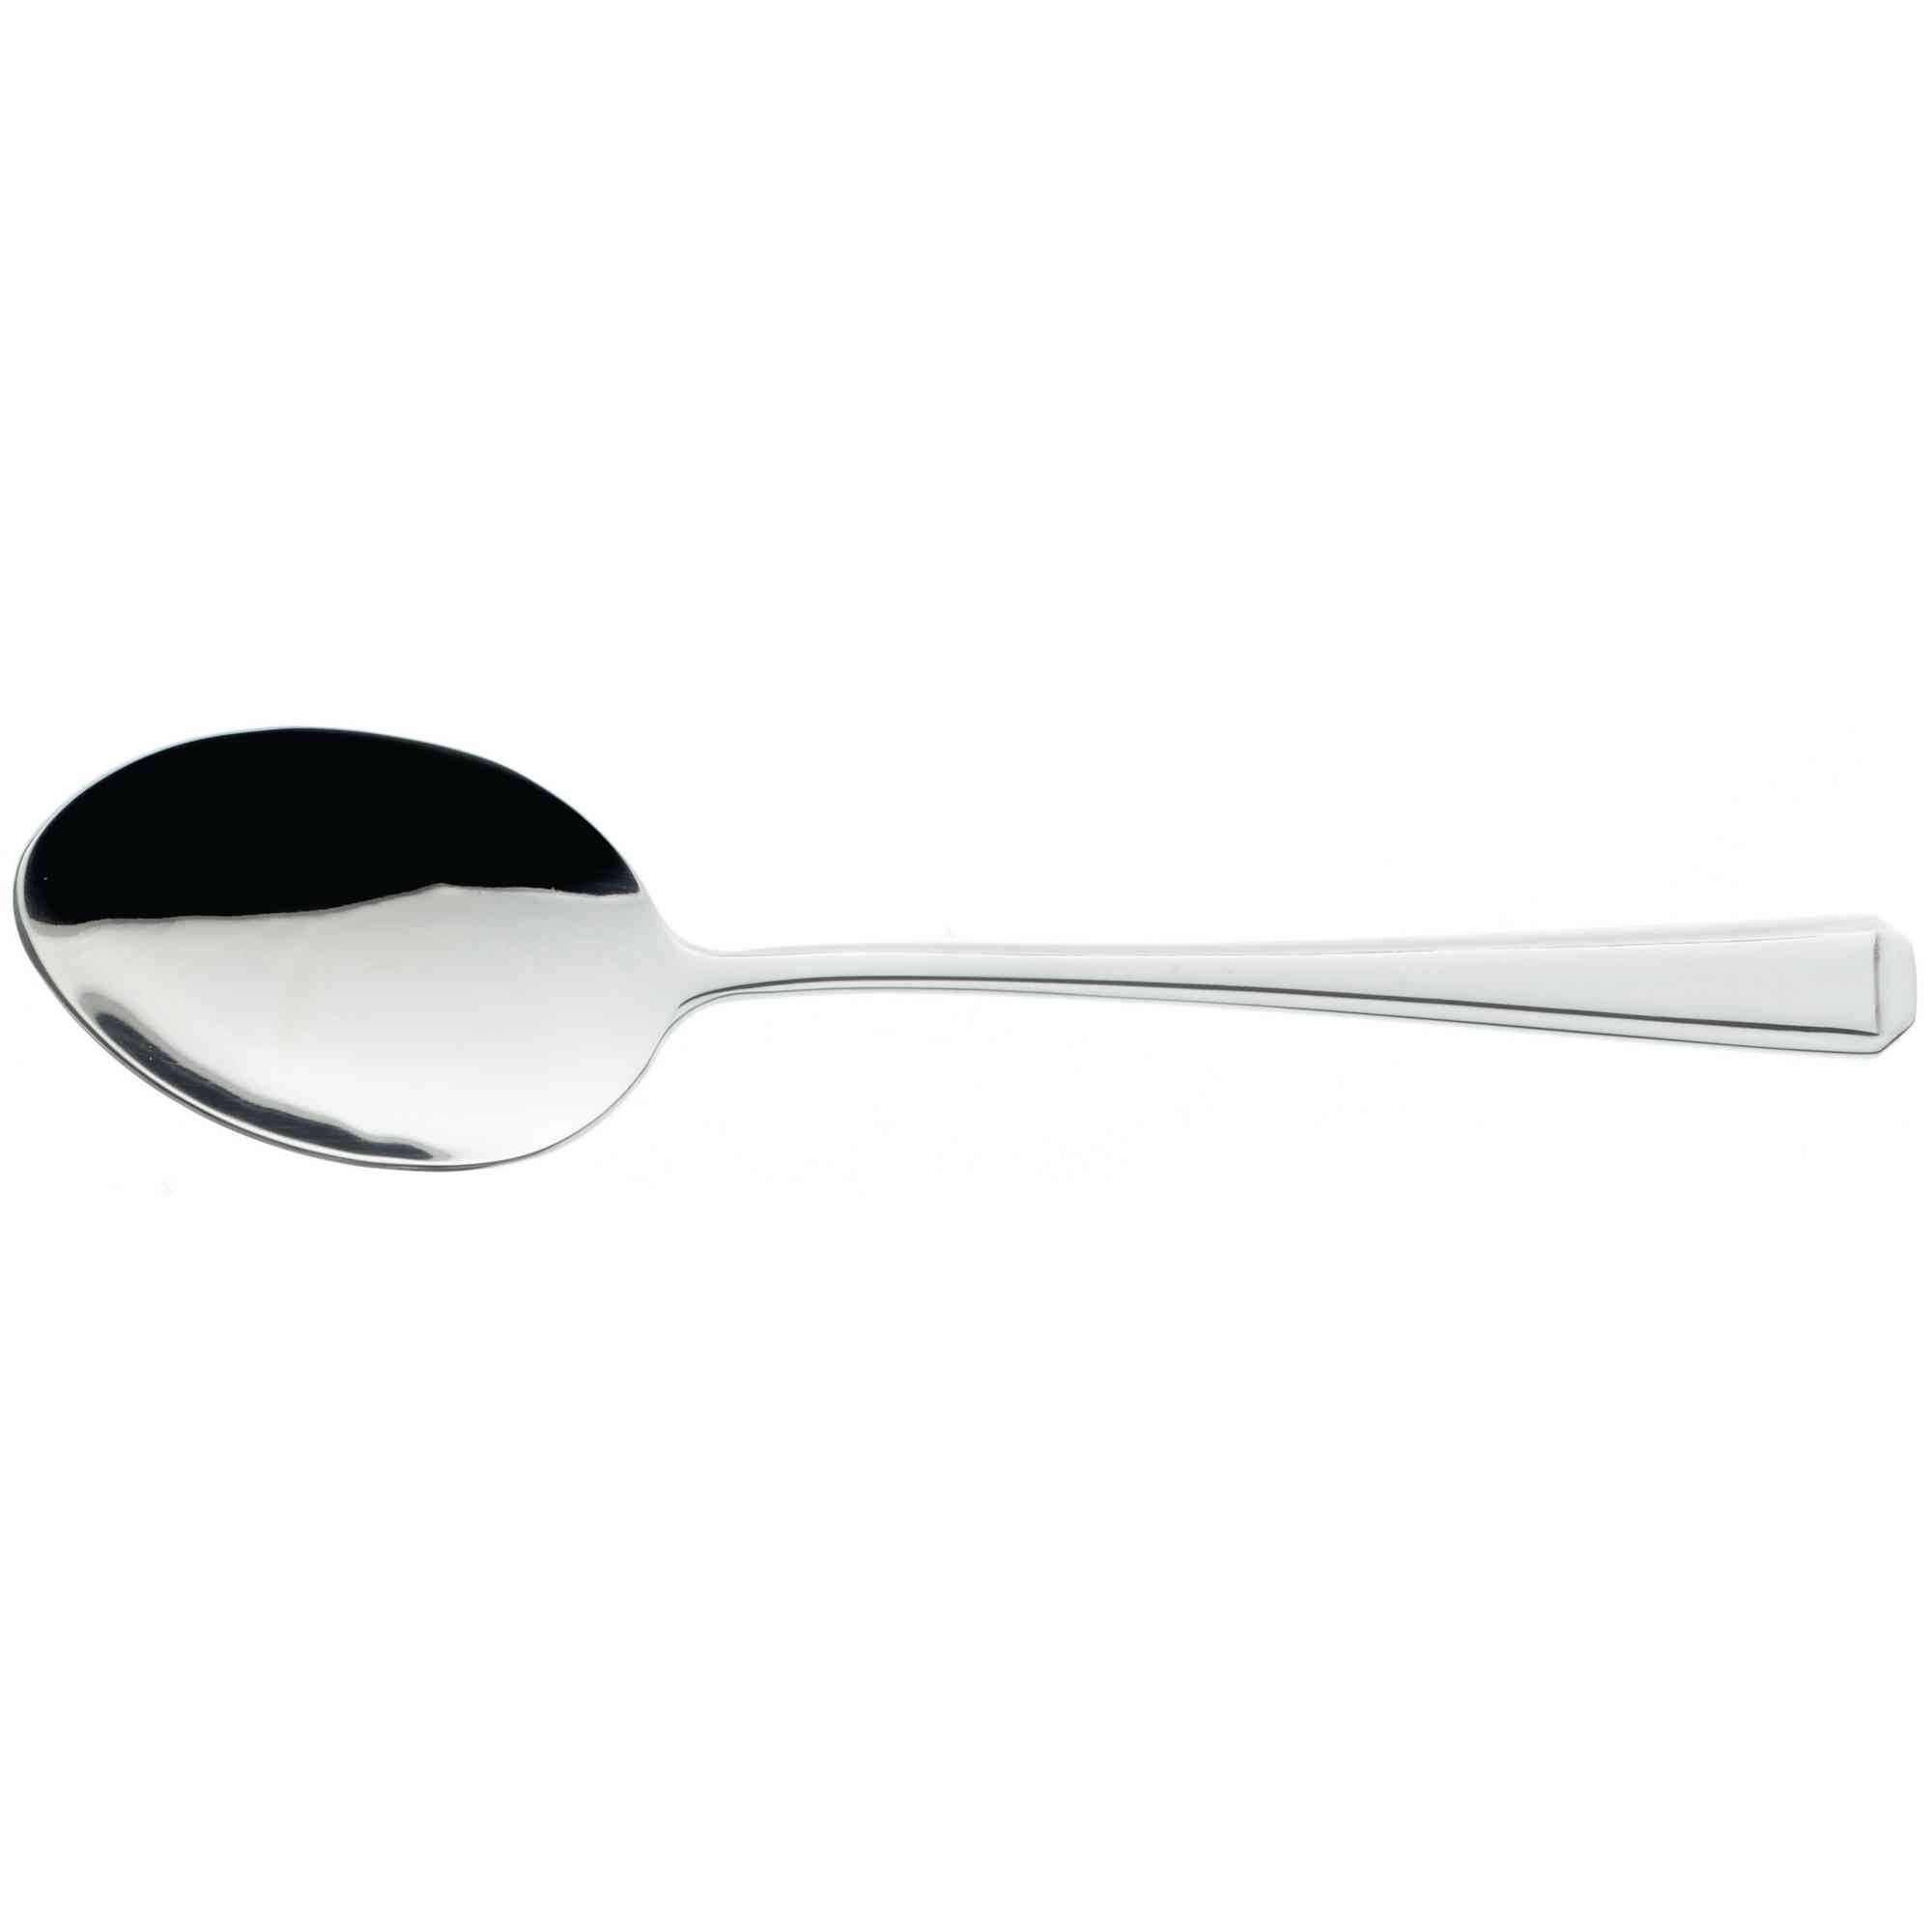 Harley Spoon - Medium Spoon